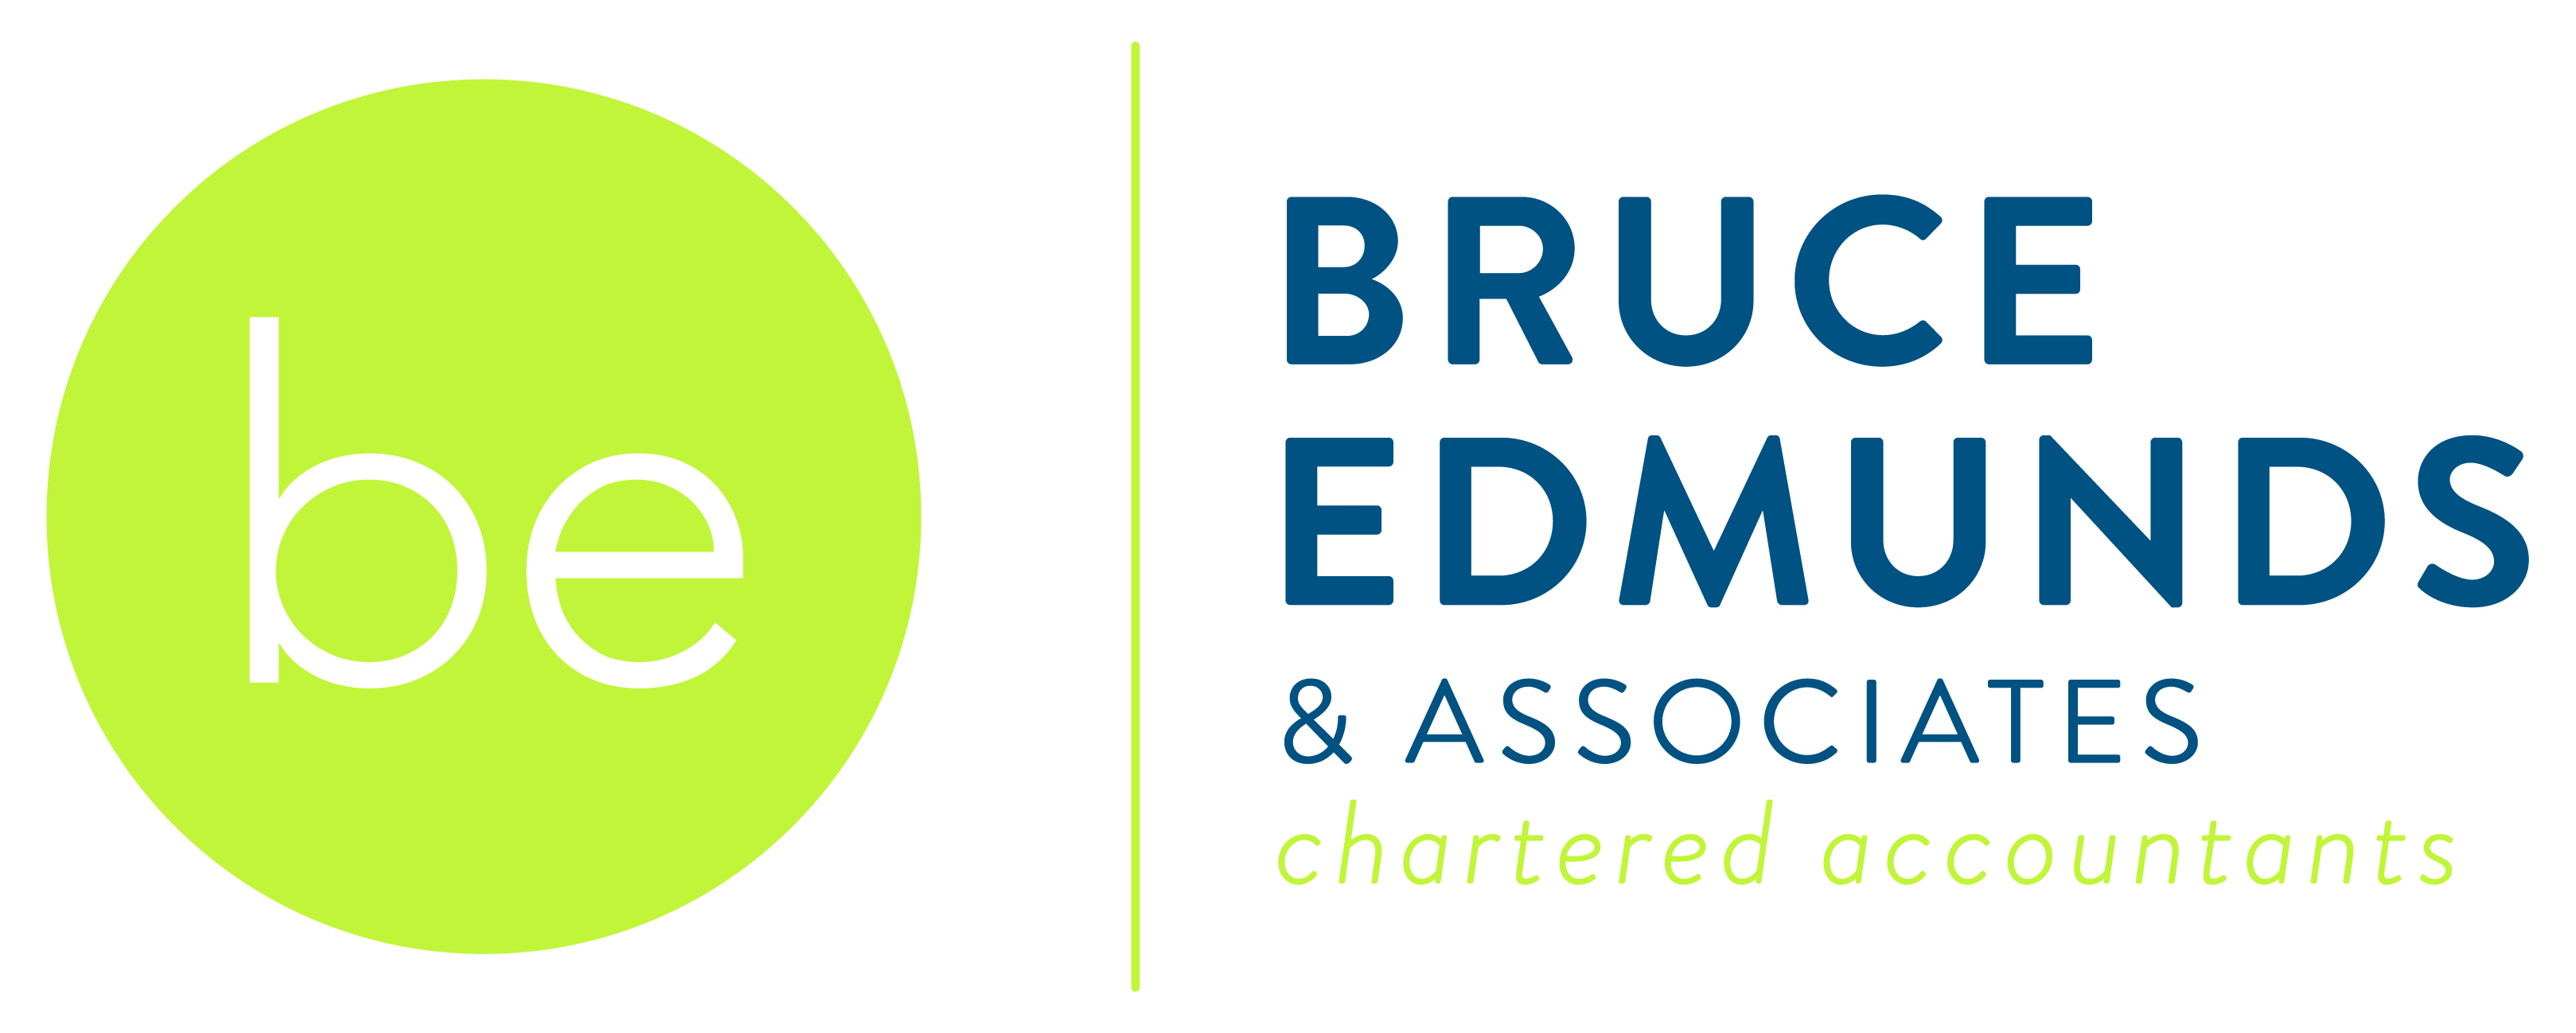 Bruce Edmunds & Associates